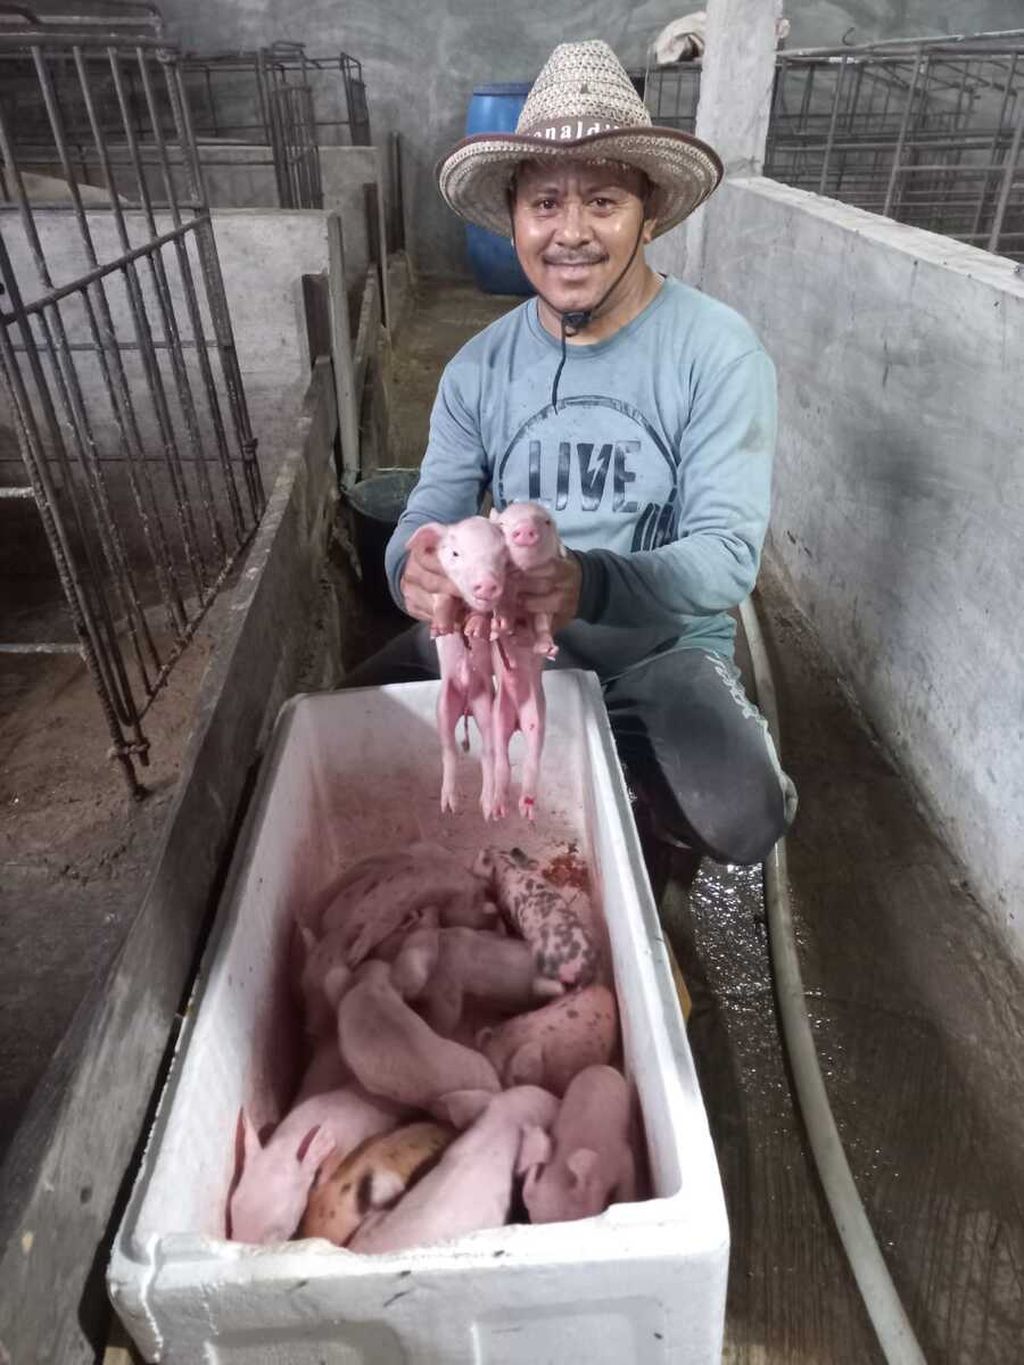 Peternak di Kelurahan Fatukoa, Kota Kupang, NTT, Daniel Aluman (47), memperlihatkan 15 anak babi yang baru saja dilahirkan dari induk jenis duroch, Rabu (18/1/2023). Ia harus memisahkan anak babi dari induknya agar tidak dimangsa sang induk.